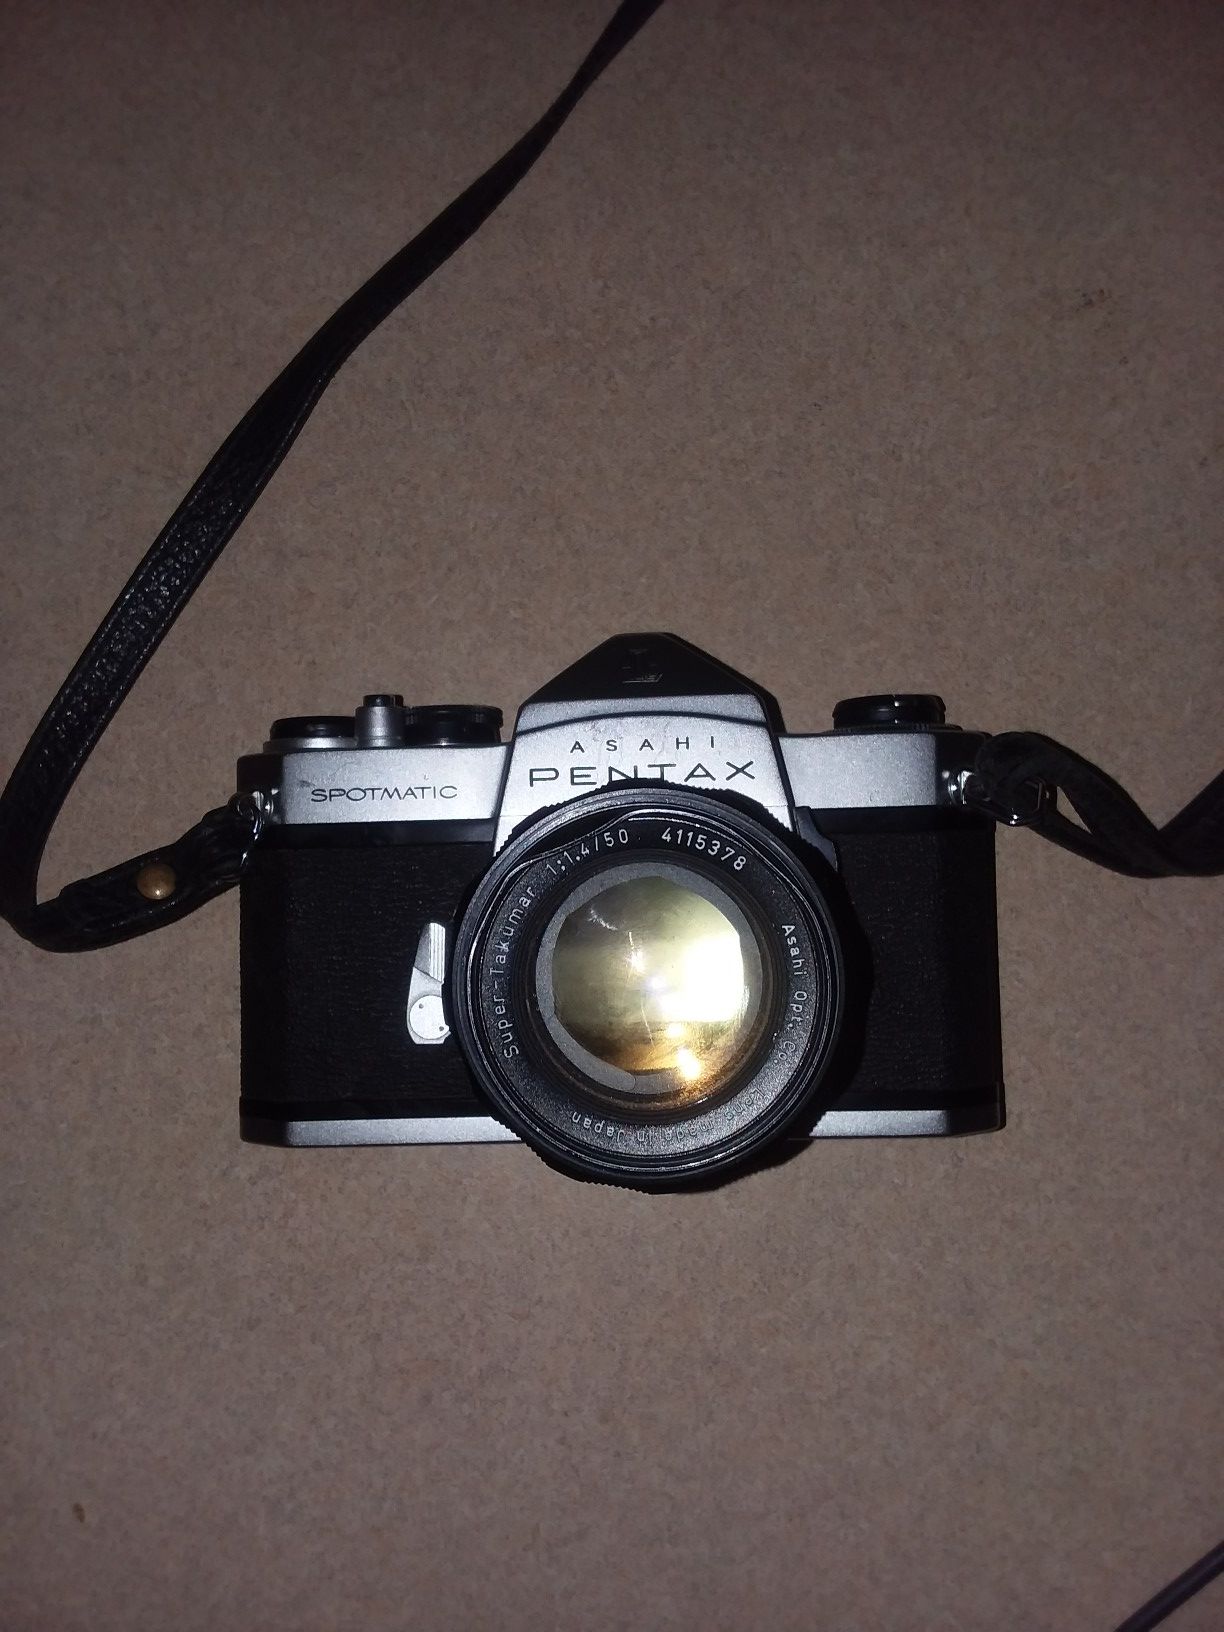 Pentax spotmatic vintage camera